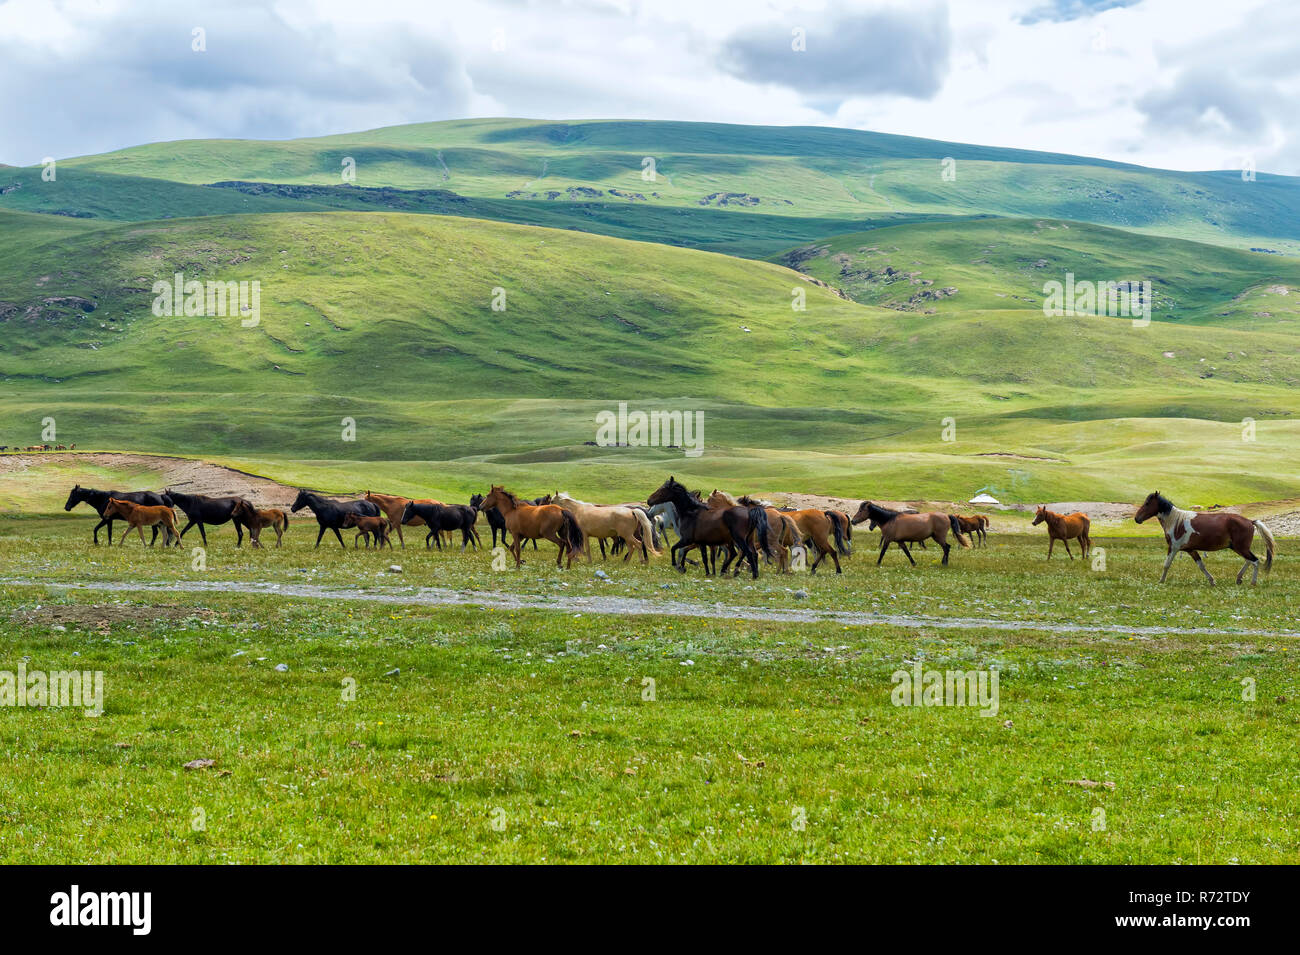 Horses running in Naryn gorge, Naryn Region, Kyrgyzstan Stock Photo